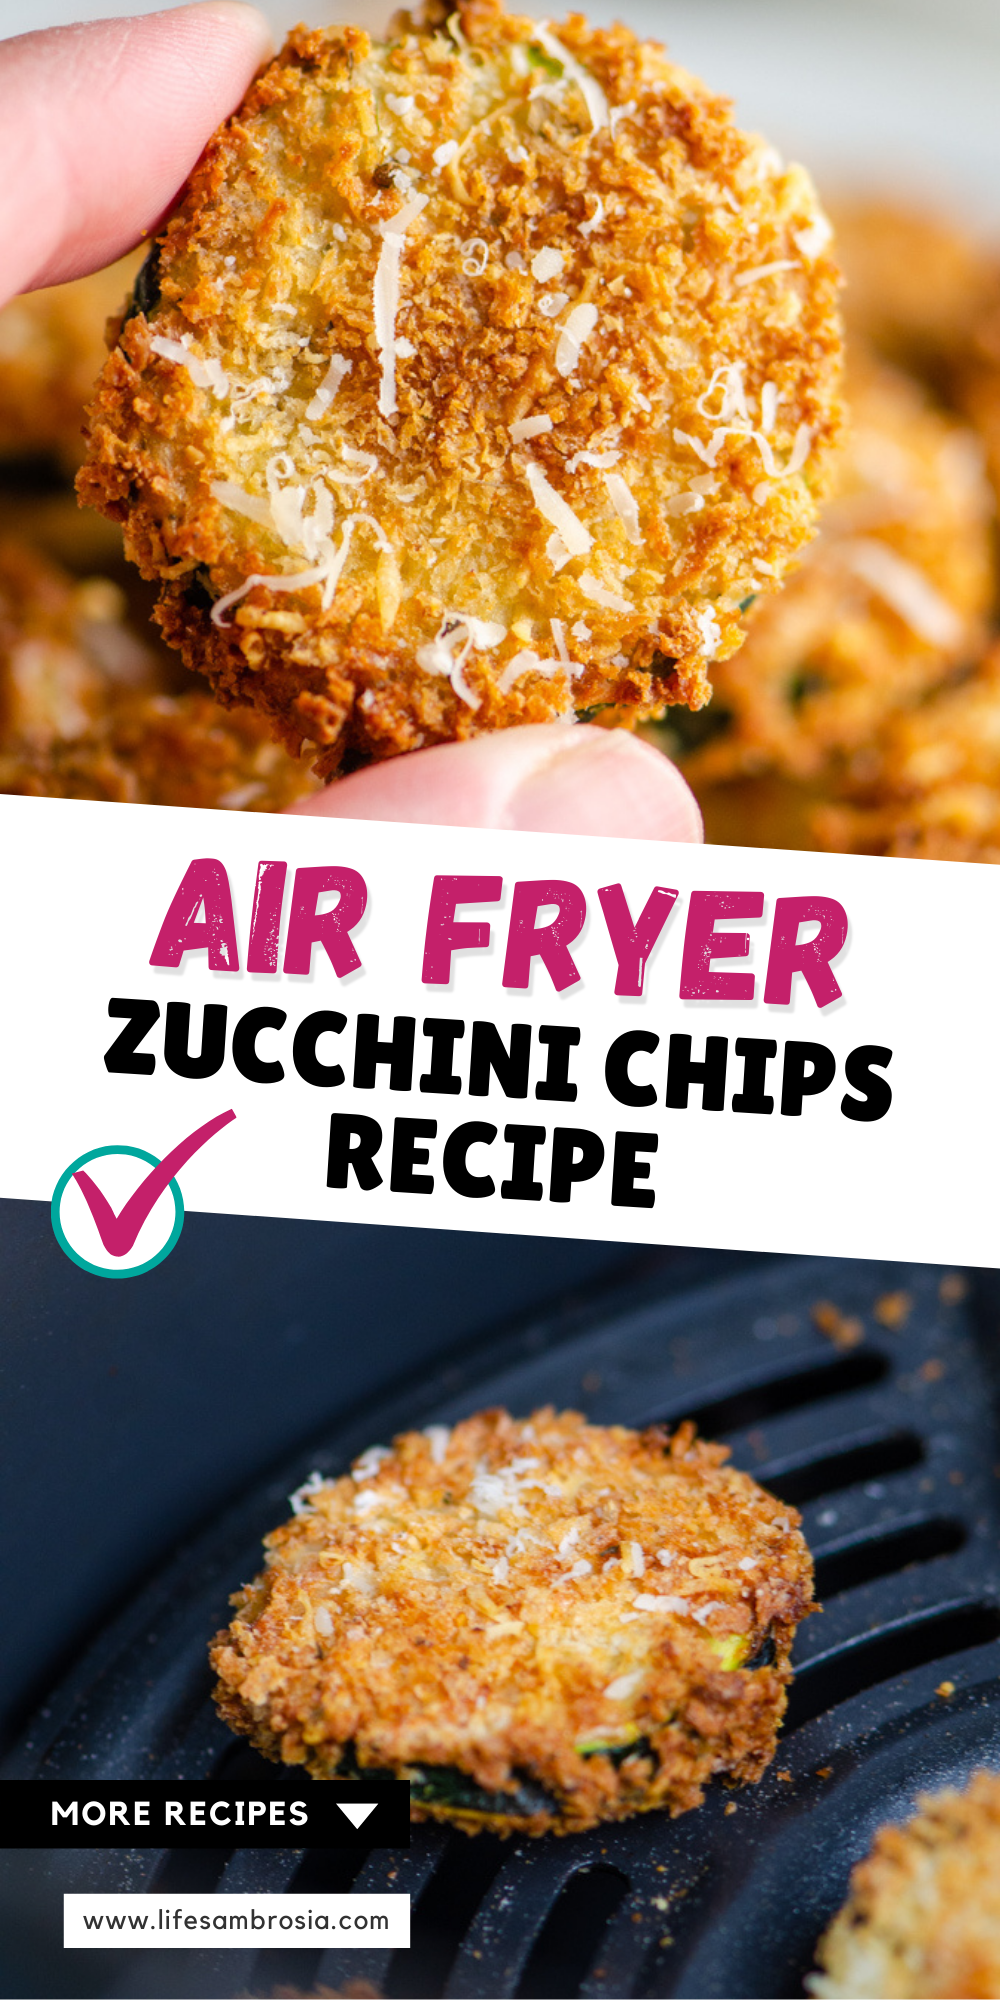 Air Fryer Zucchini Chips Recipe | Panko Coated | Life's Ambrosia